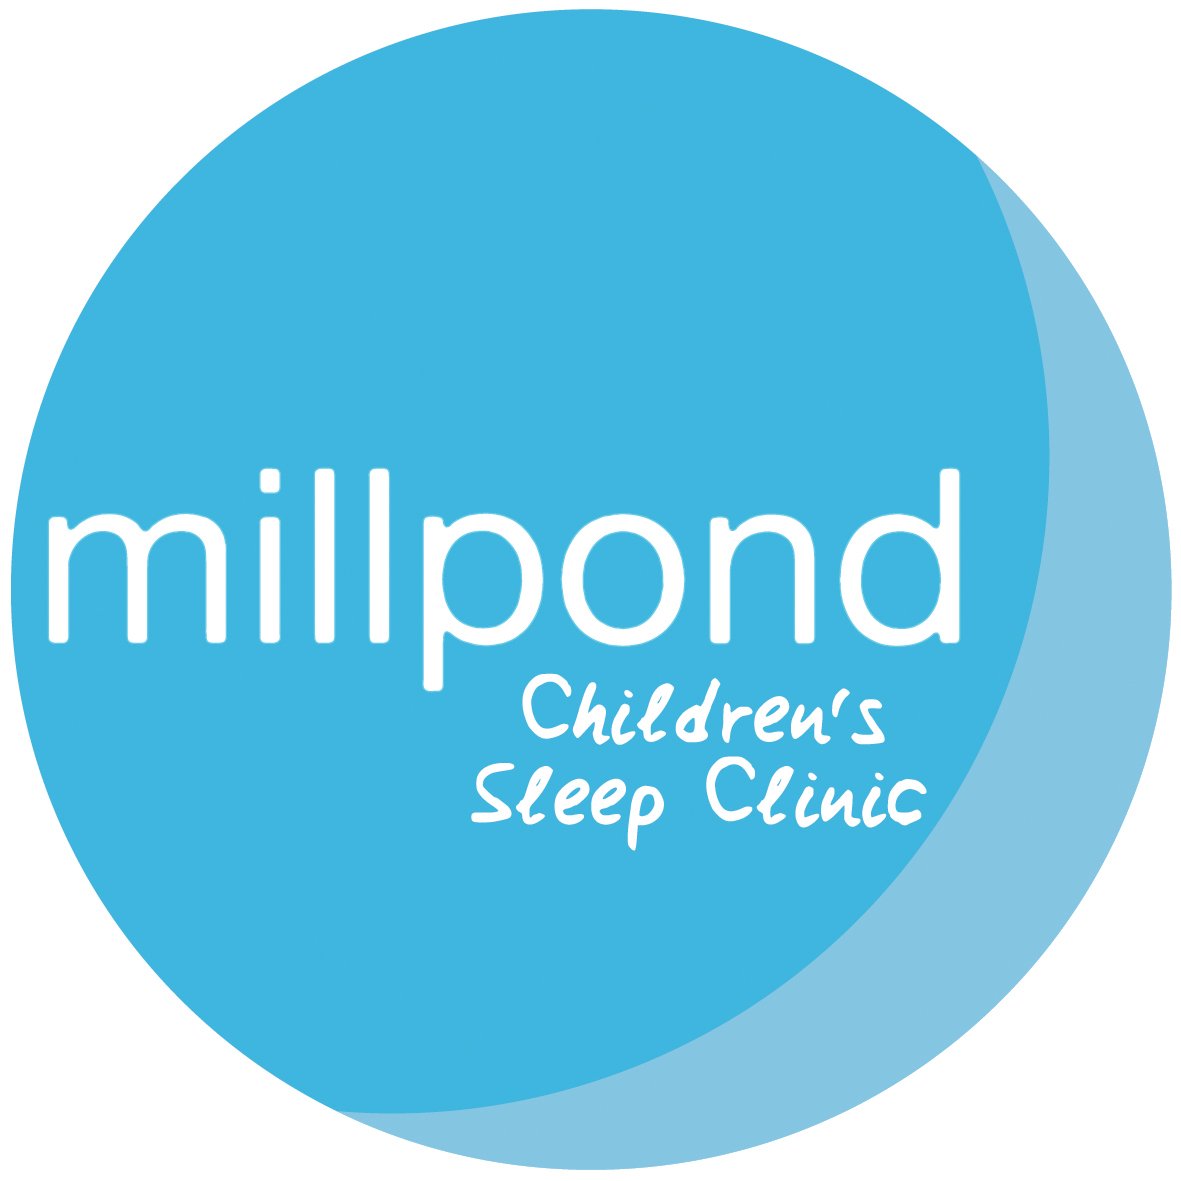 Millpond Childrens Sleep Clinic logo